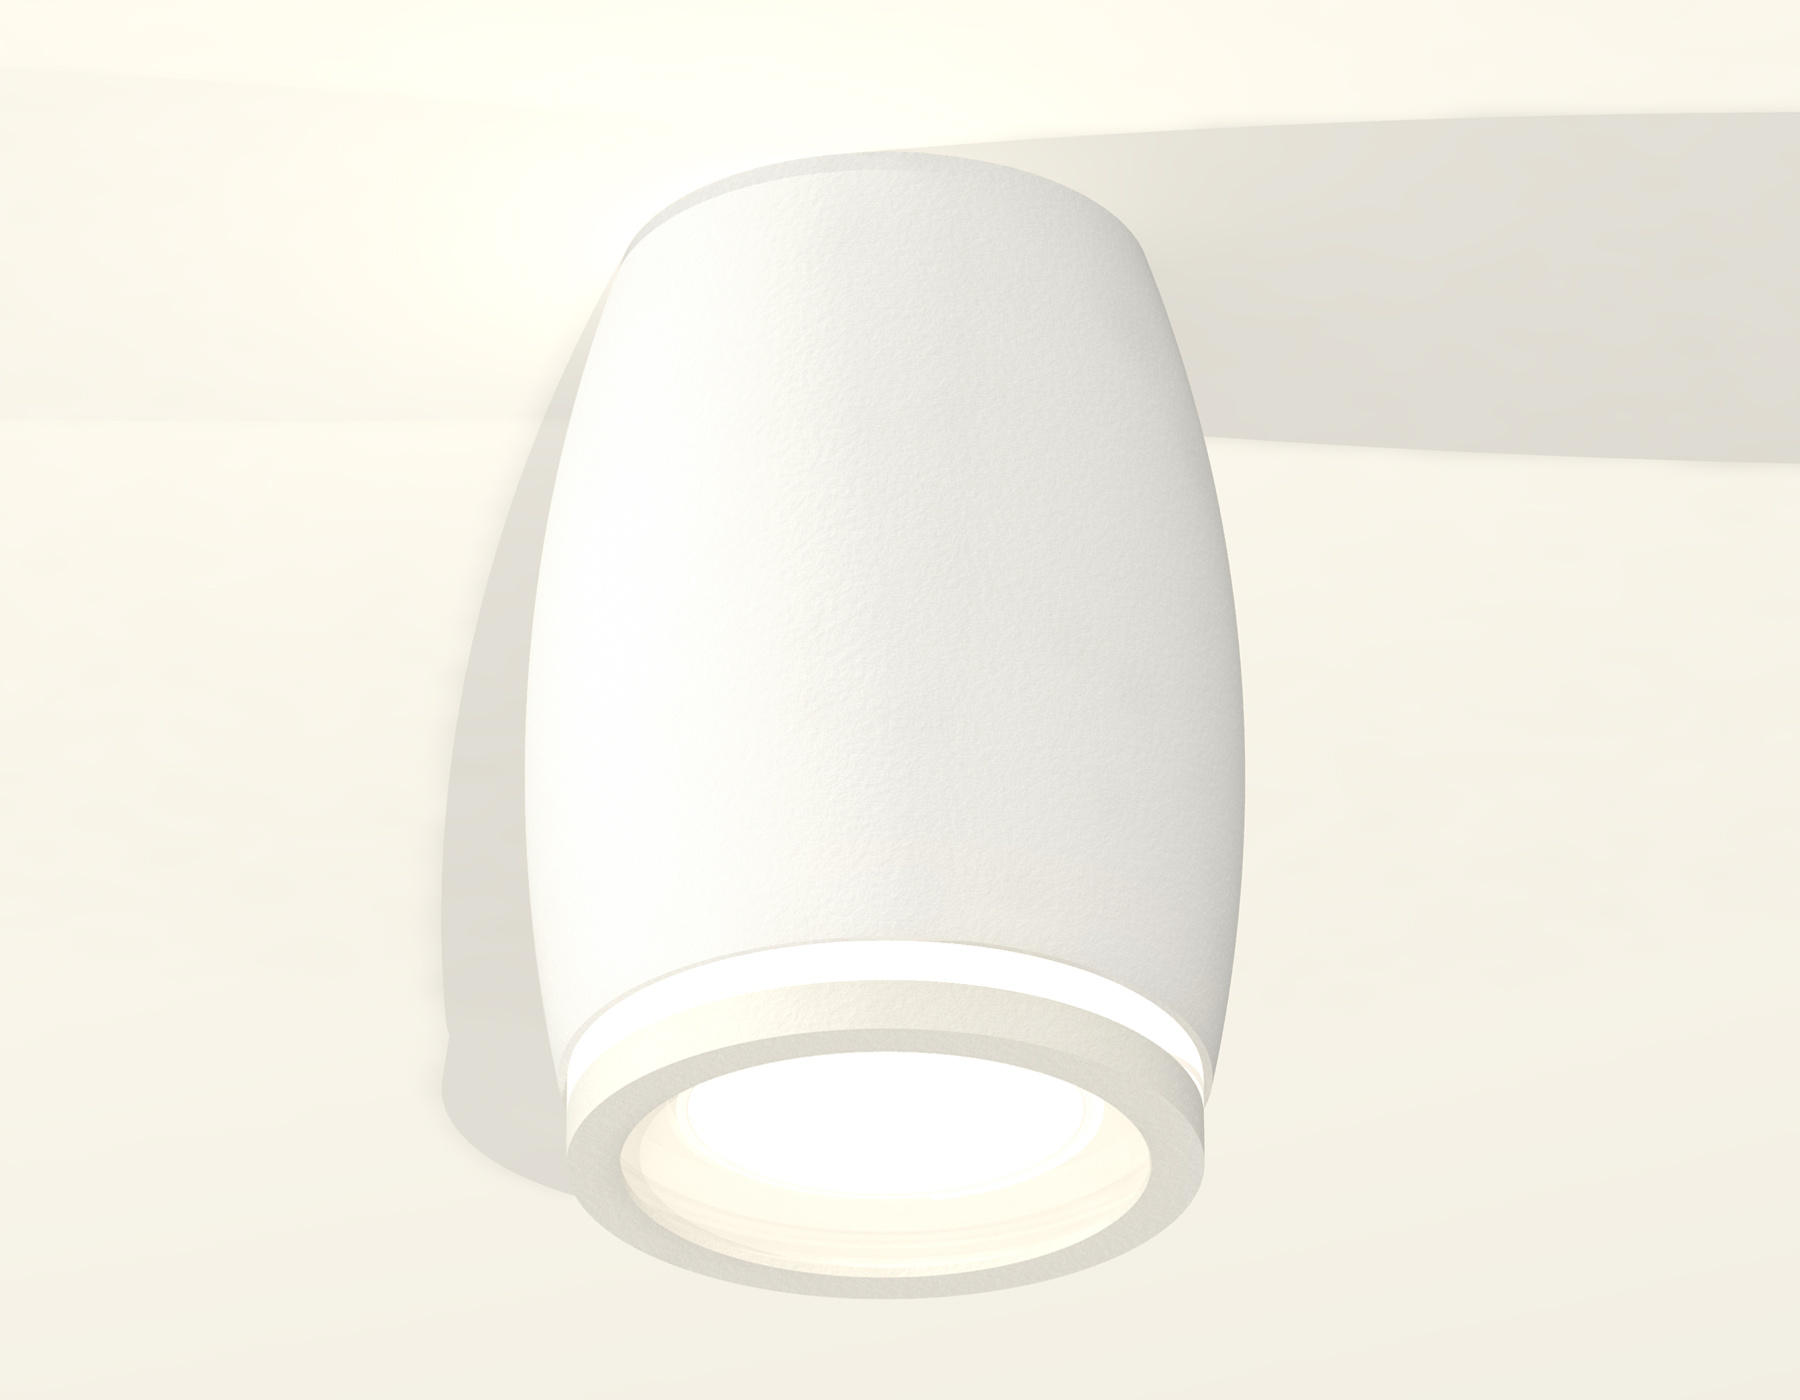 Накладной светильник Ambrella Light Techno XS1122020 (C1122, N7120)